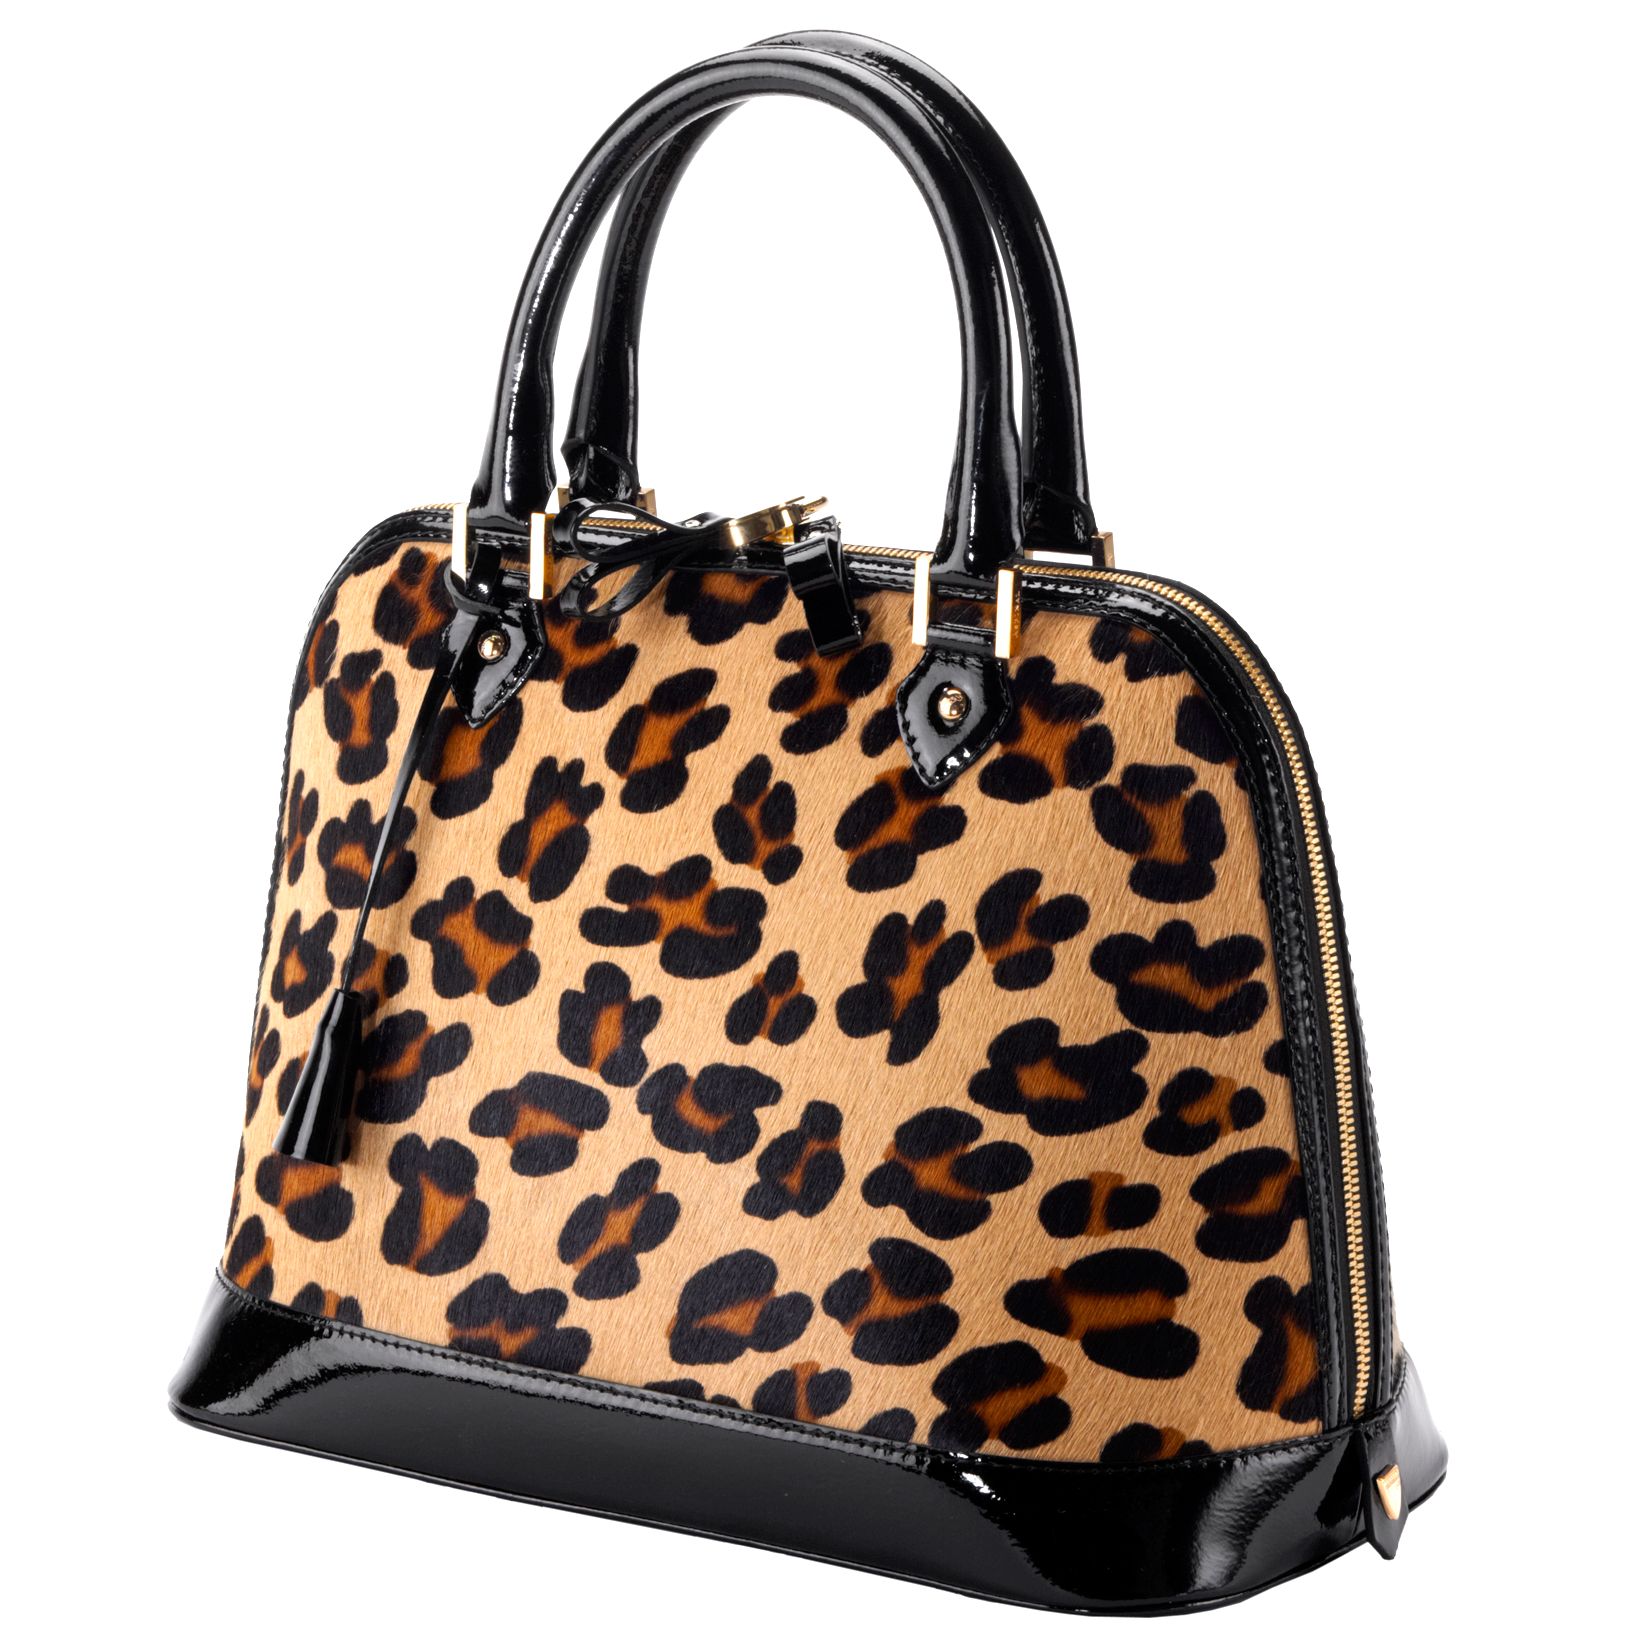 Aspinal Hepburn Leopard Print Handbag, Brown at John Lewis